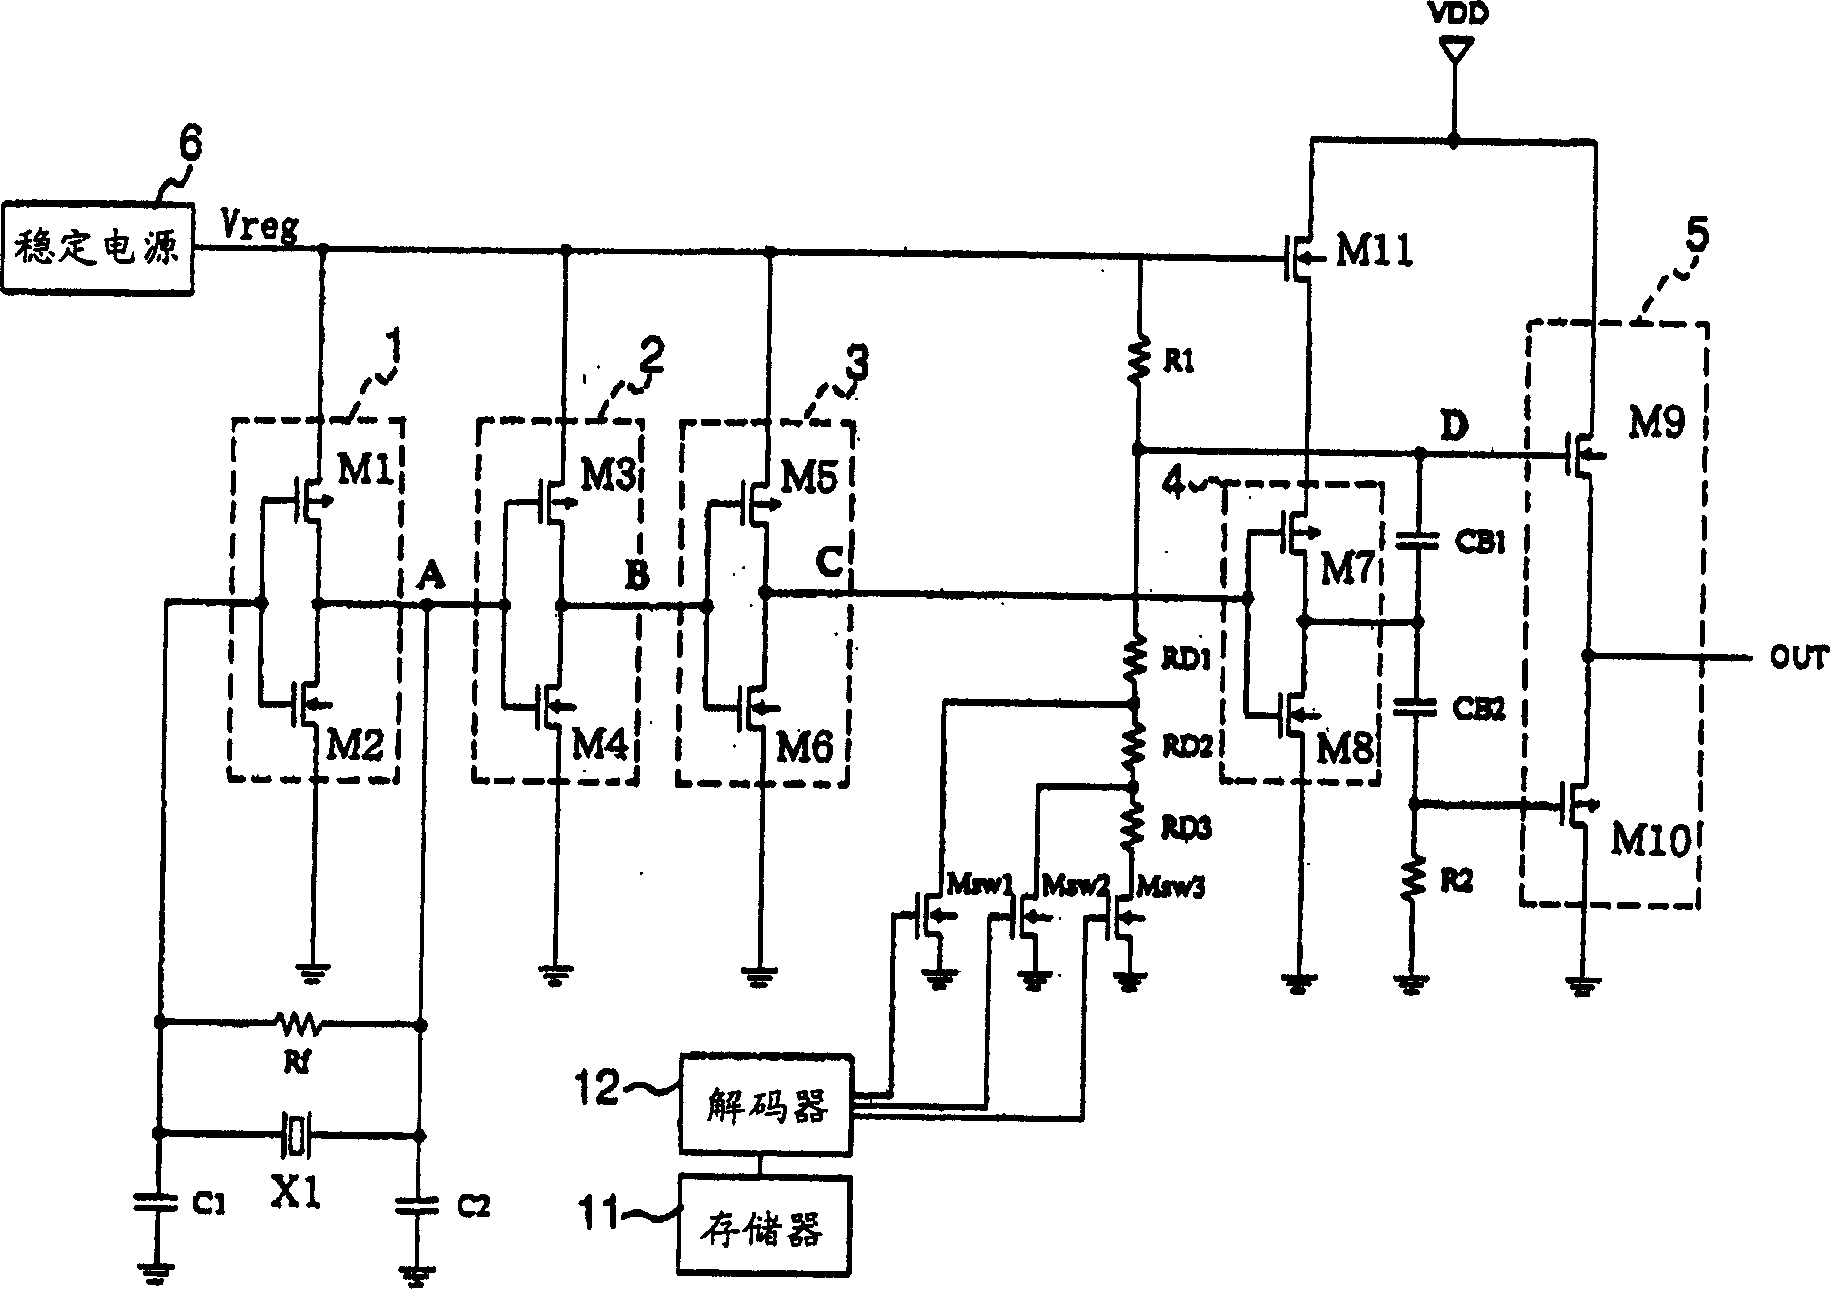 Piezoelectric vibration circuit